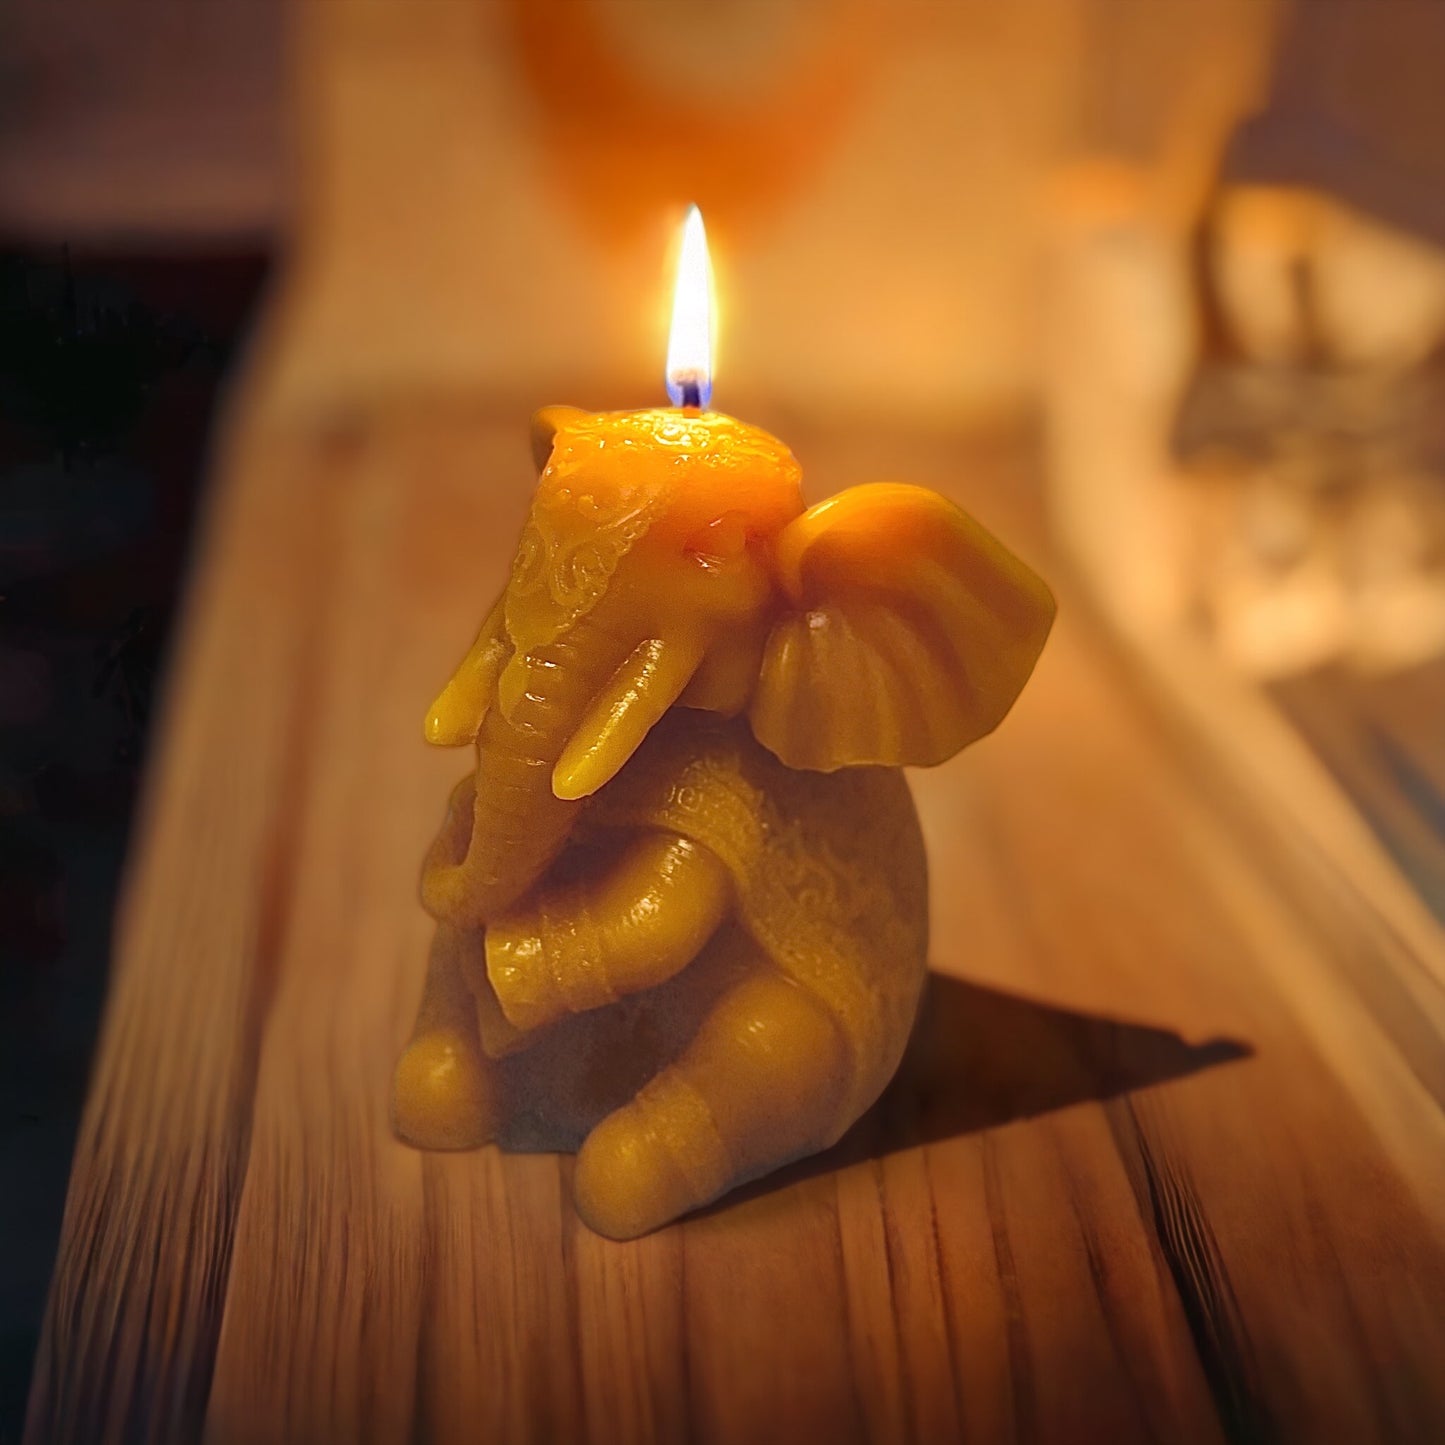 Elephant Beeswax Candle - Ganesha Statue